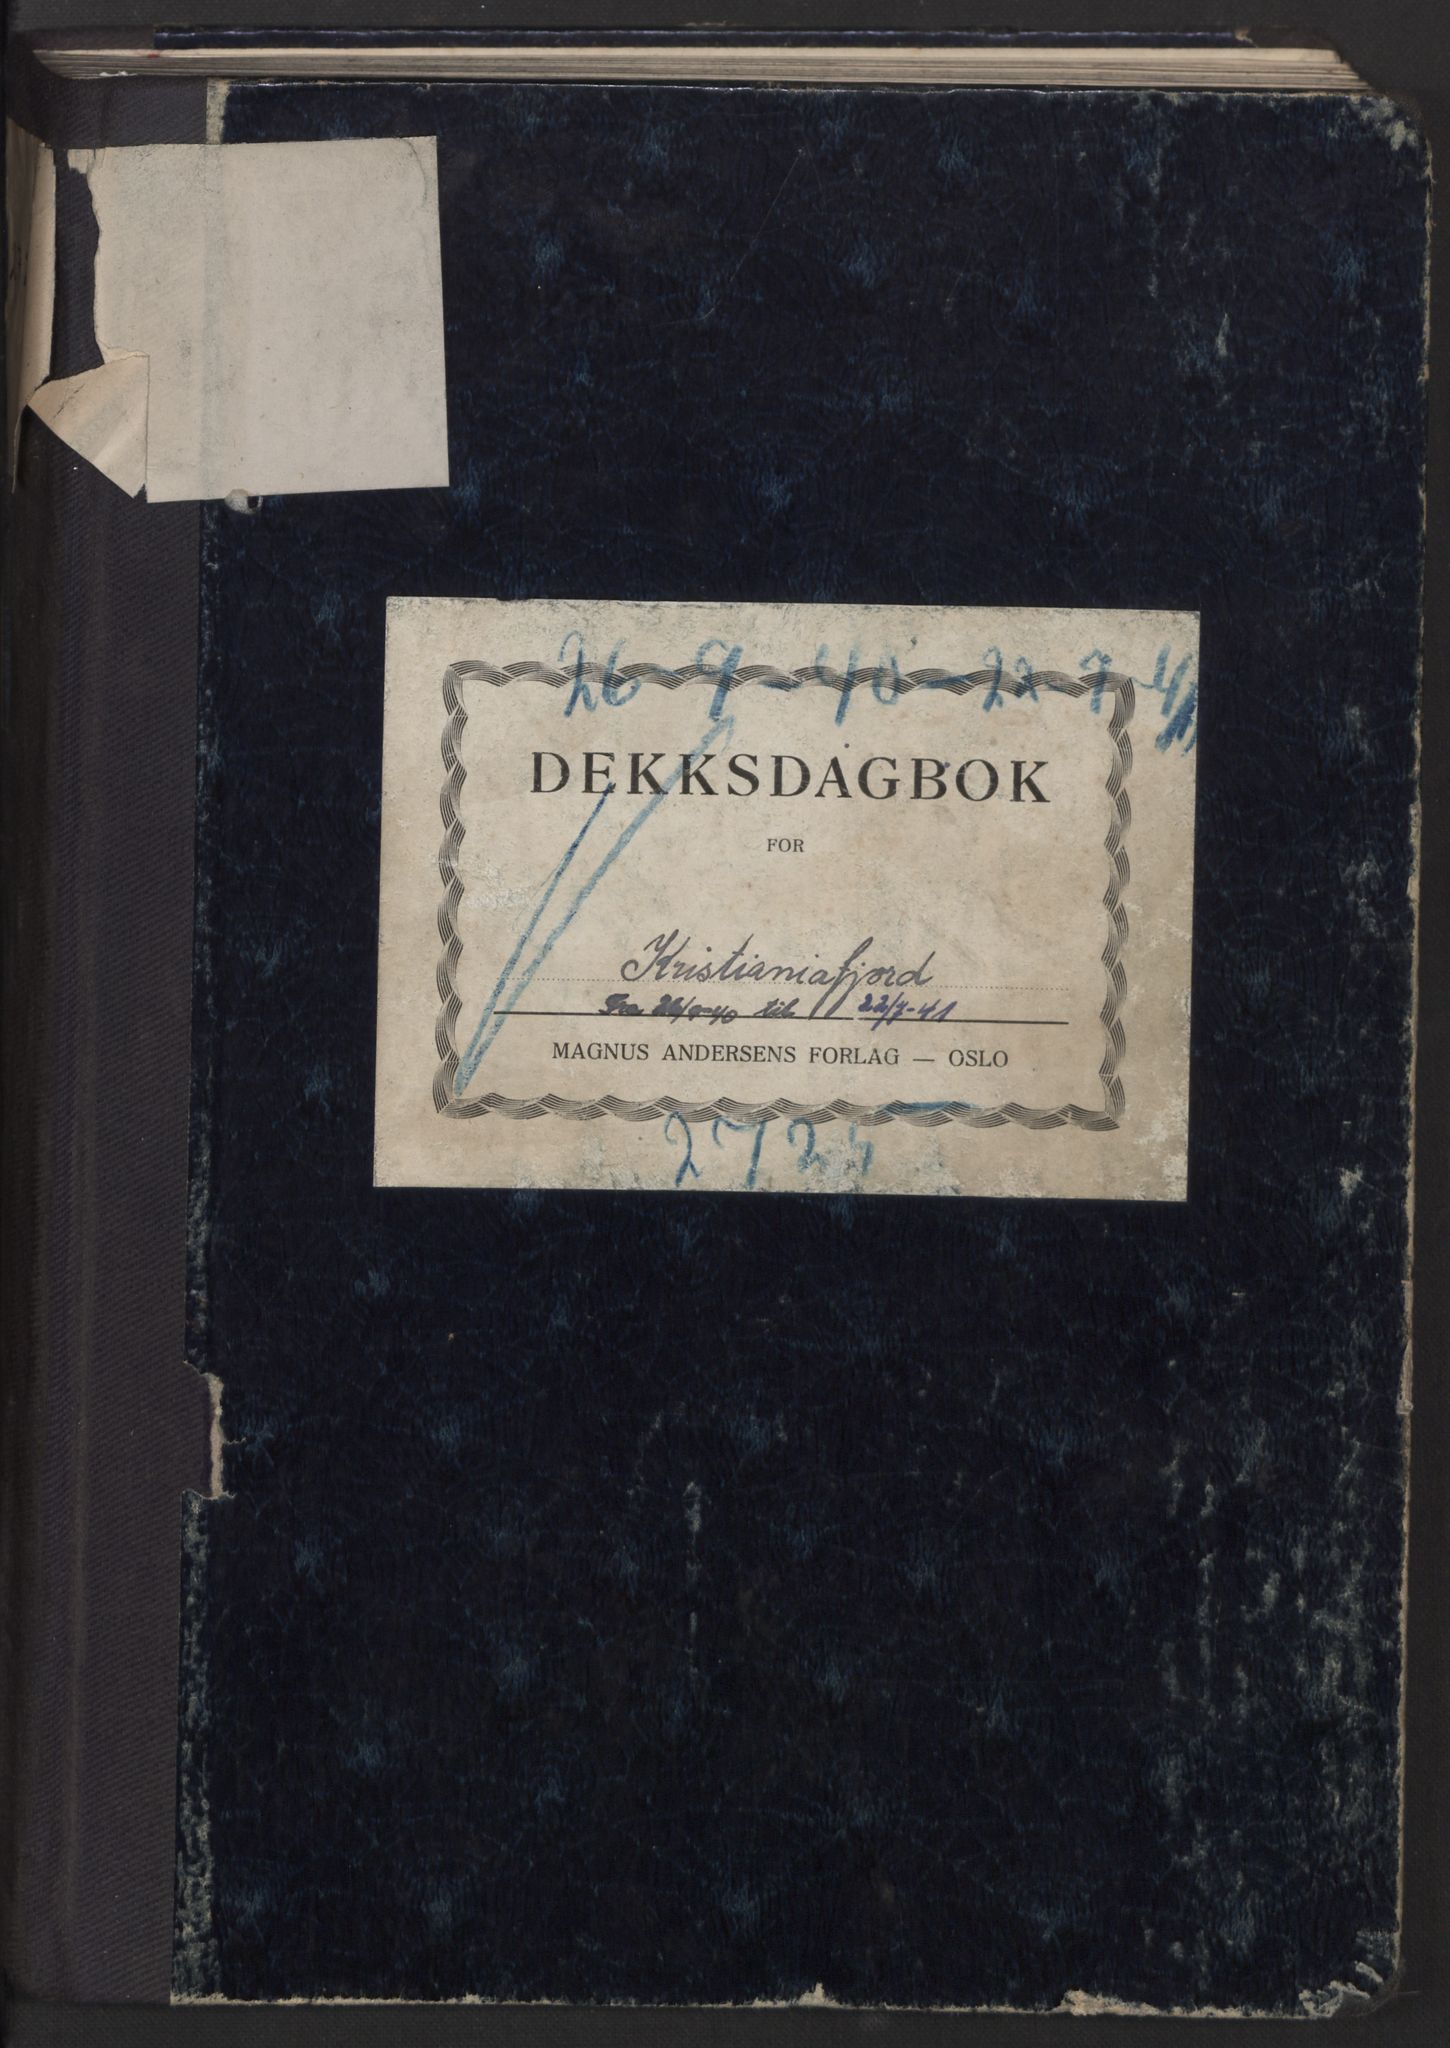 RA, Nortraship, Skipsdagbøker, F/L0557: Boknr. 2724 - 2726, 0002: Boknr. 2725 Kristianiafjord, 1940-1941